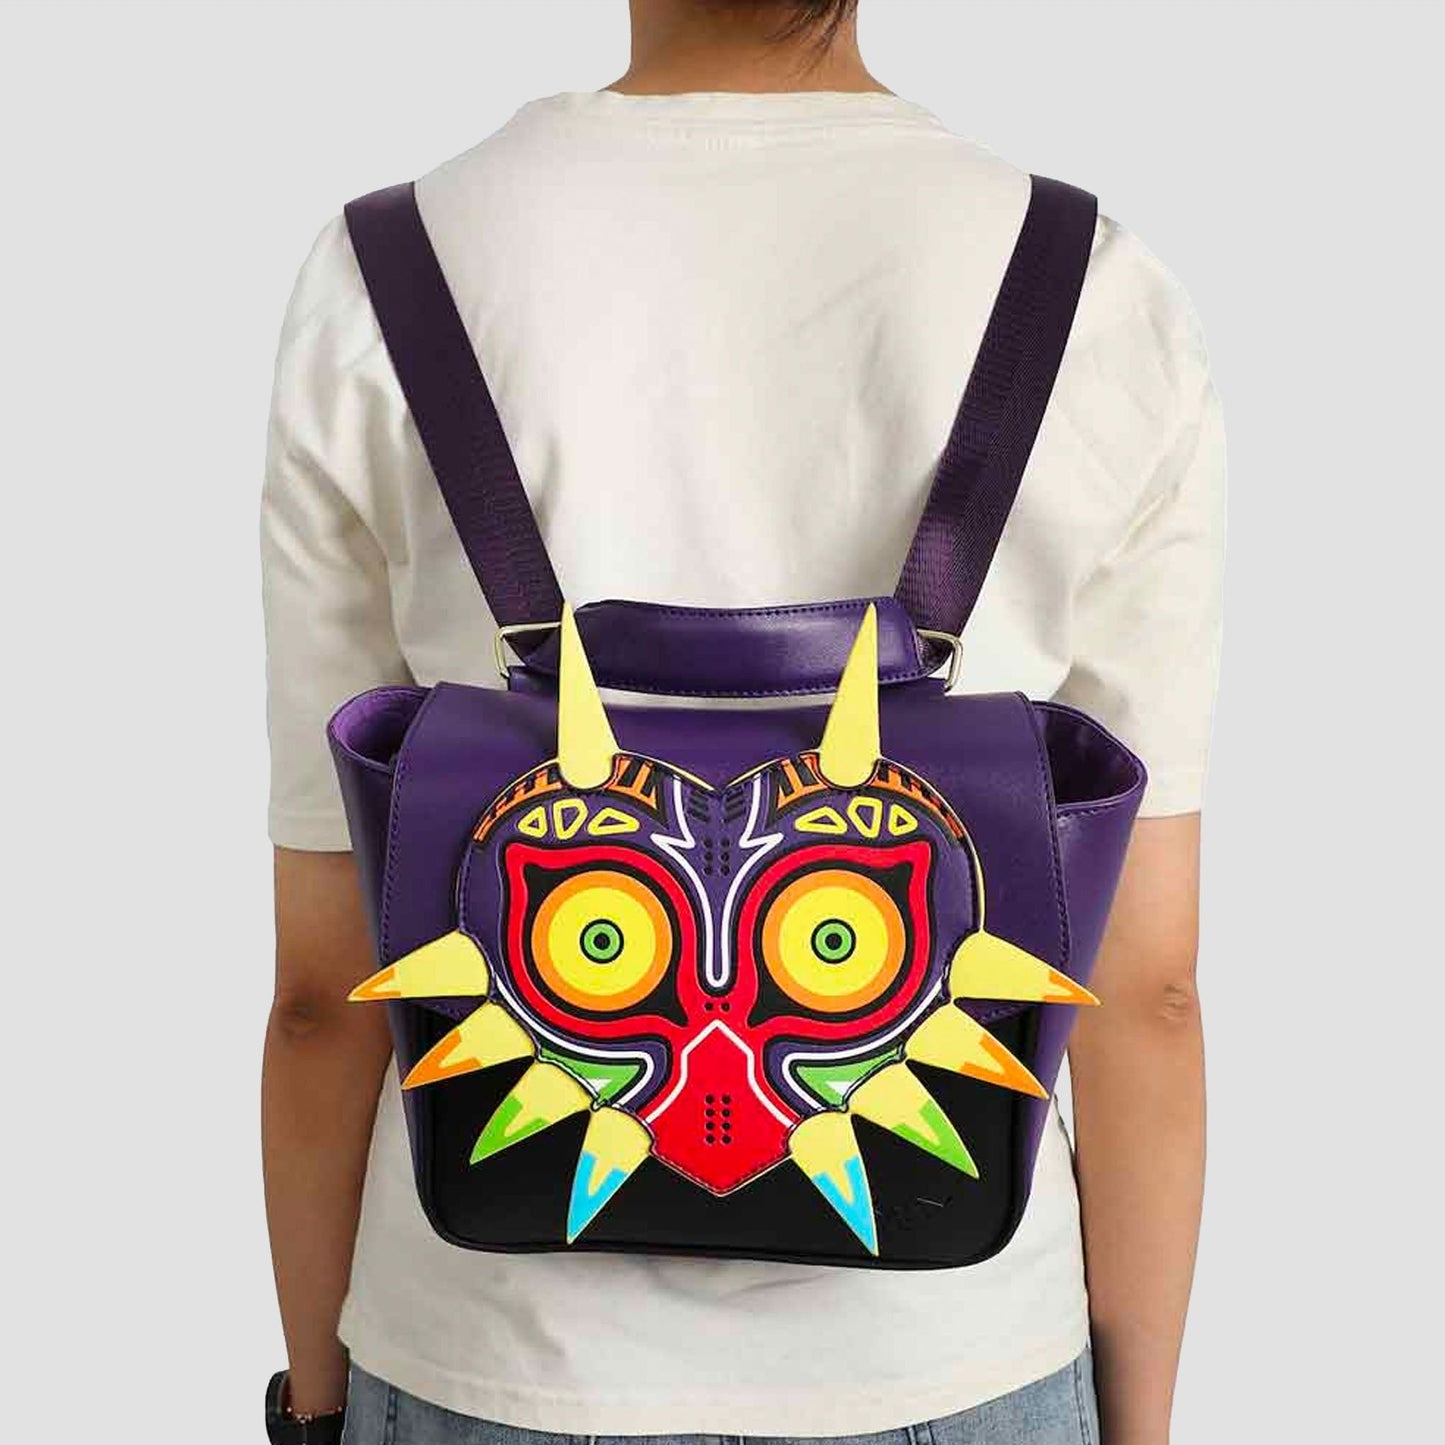 Majora's Mask (The Legend of Zelda) Convertible Mini Backpack